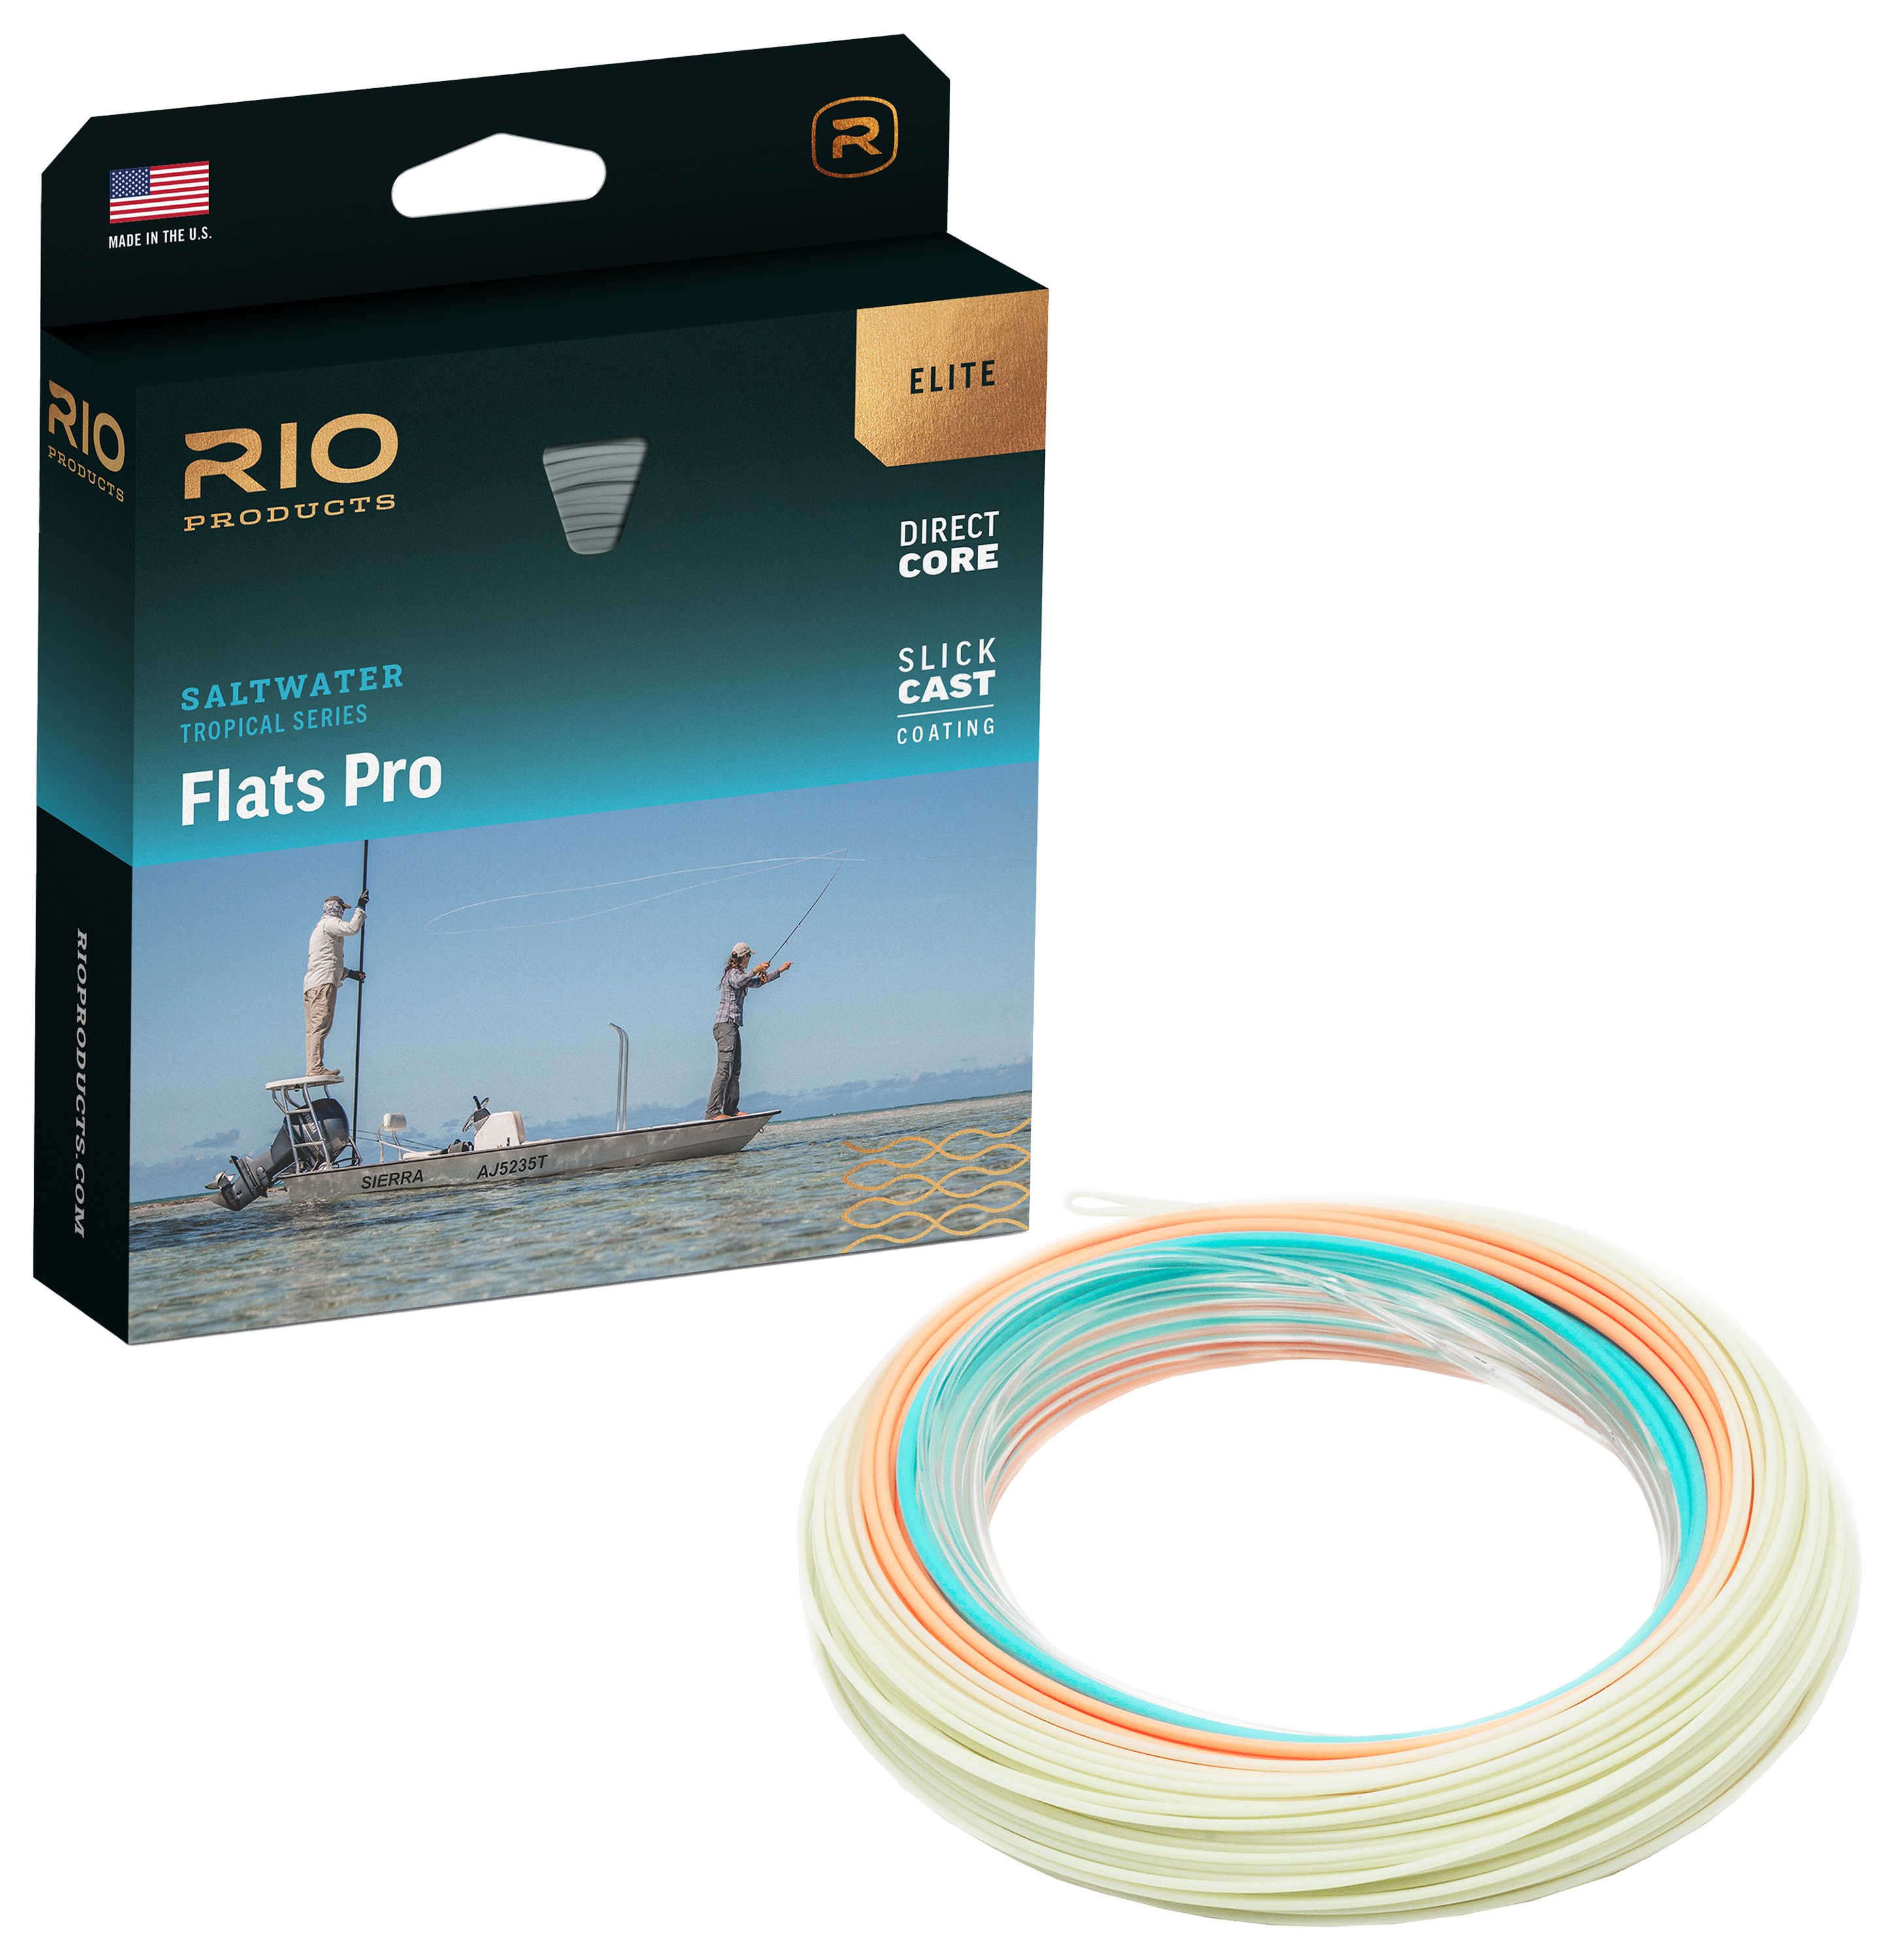 RIO Elite Flats Pro 15' Clear-Tip Fly Line - Clear/Aqua/Orange/Sand - 10